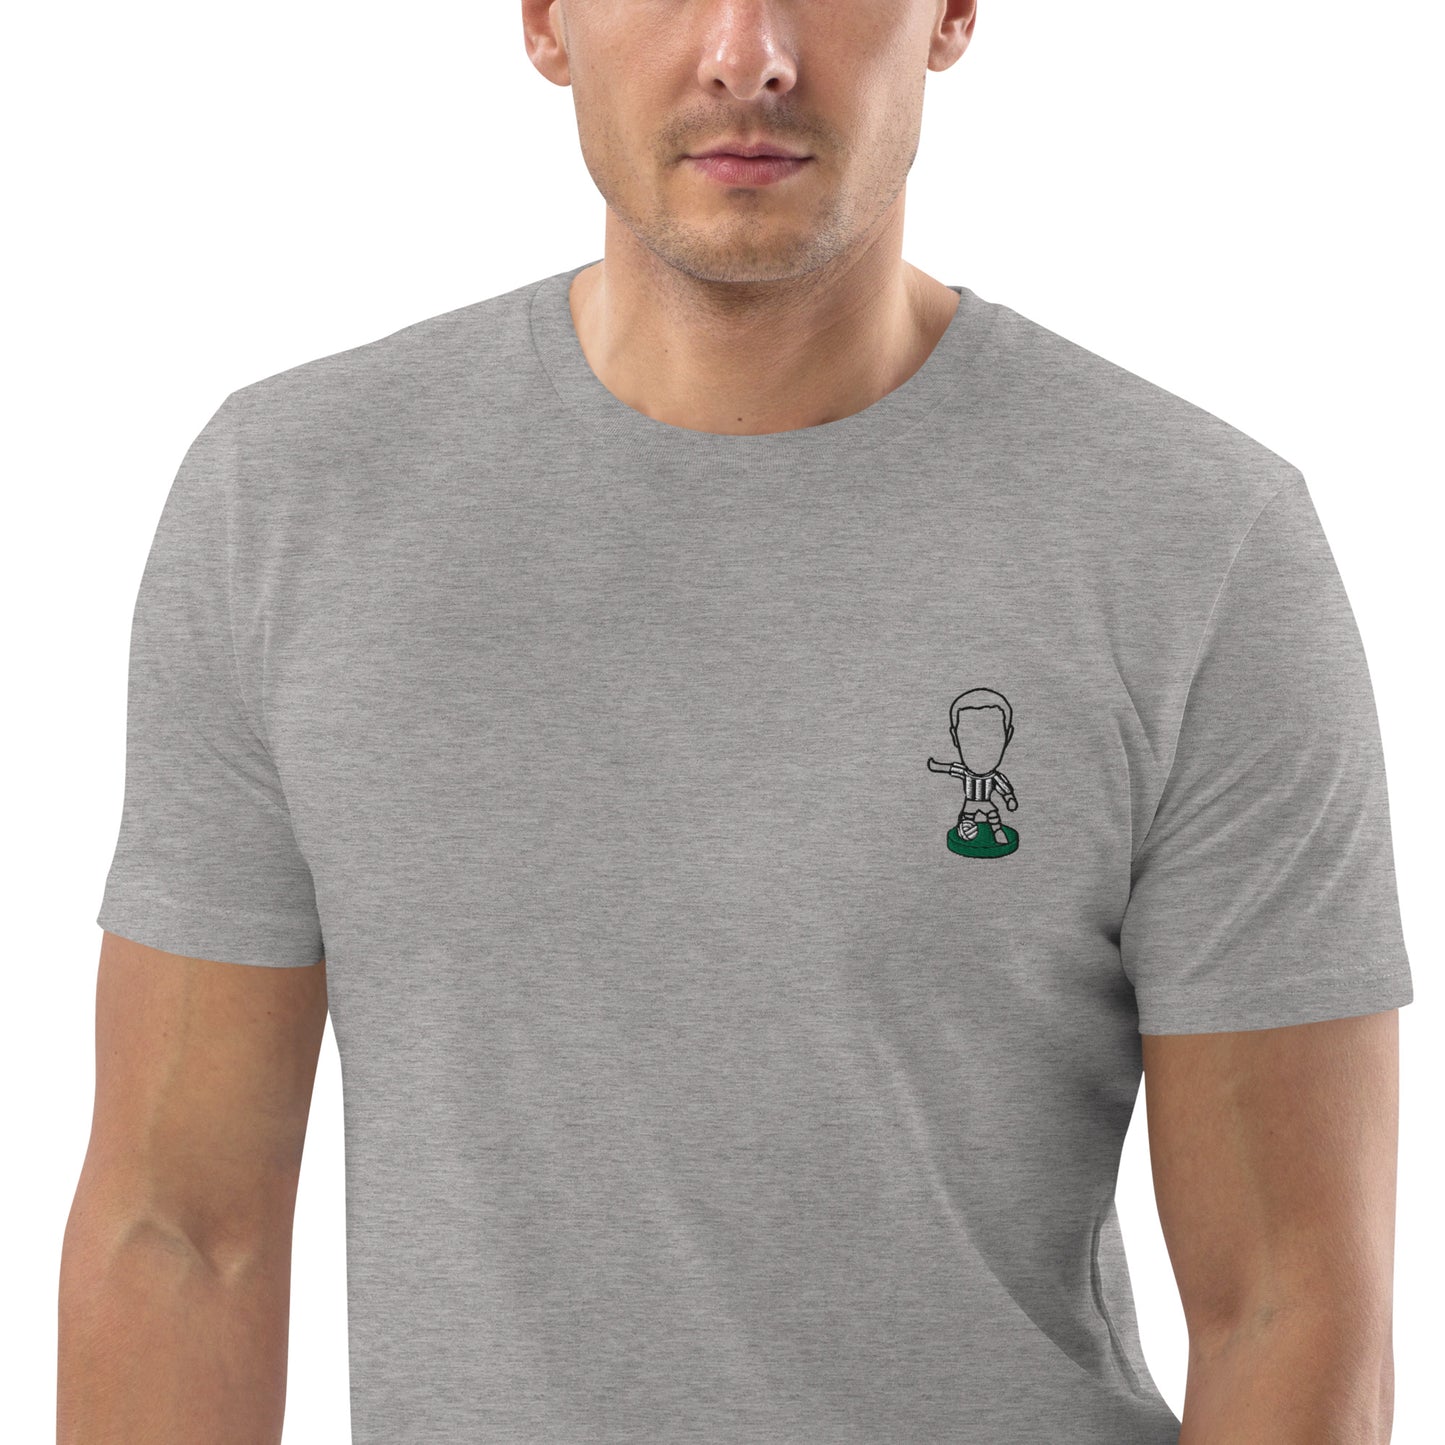 Tyneside Stripes (Black Outline) - Embroided - Unisex Organic Cotton Football T-Shirt - Newcastle United Inspired